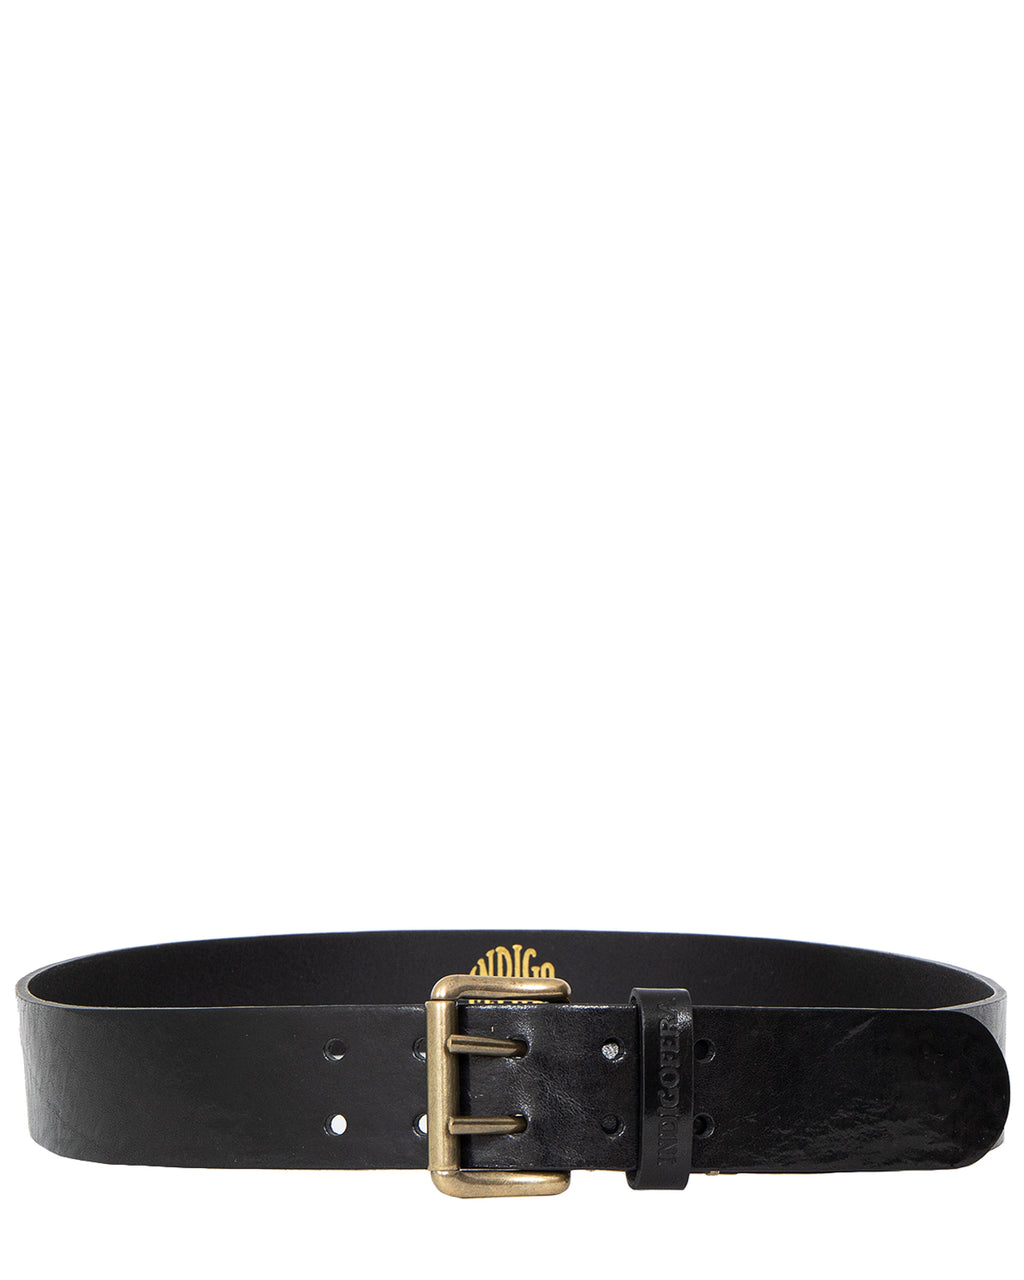 Indigofera Danko Leather Belt, Black